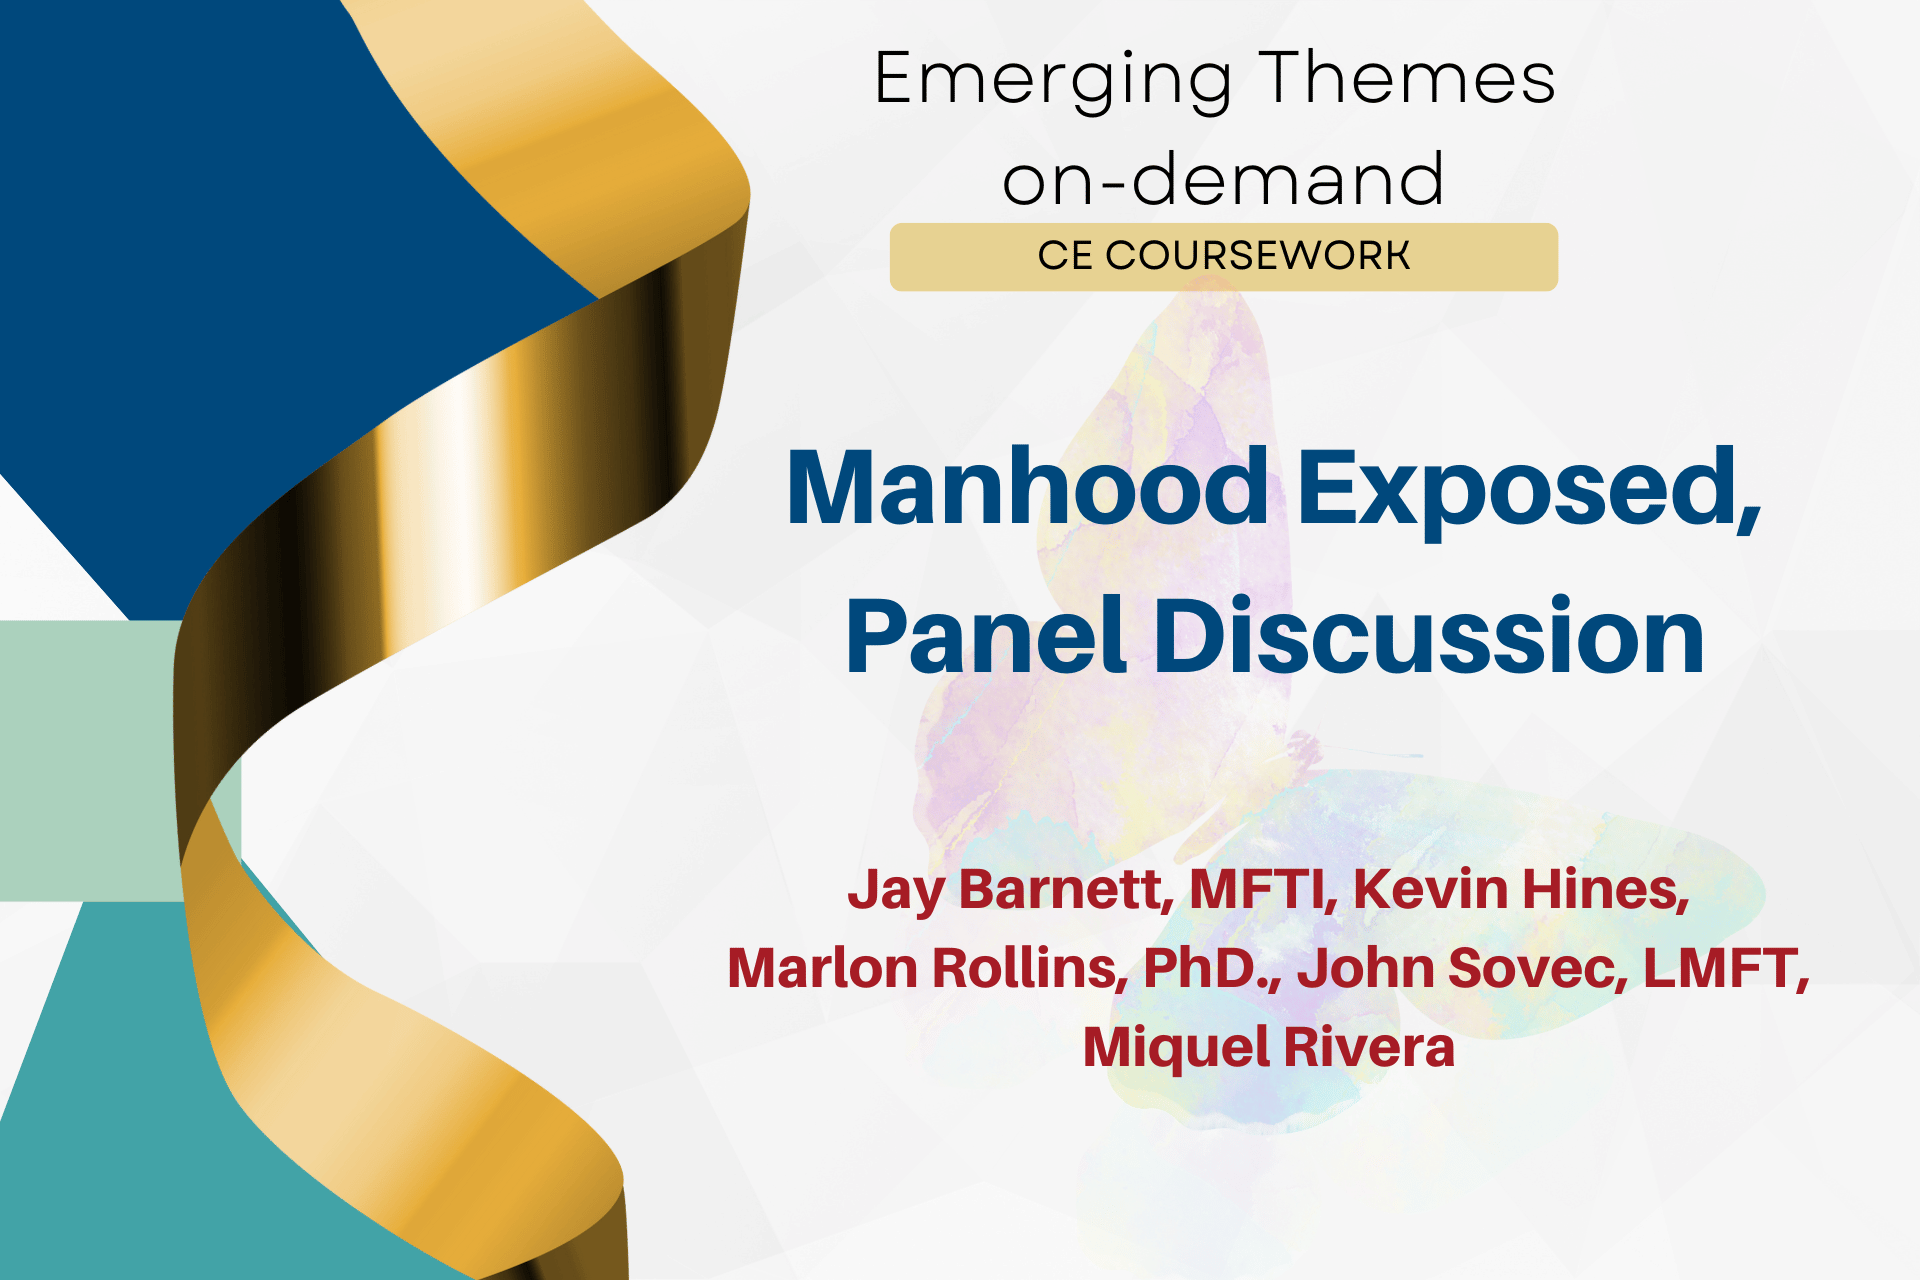 Manhood Exposed: Panel Discussion